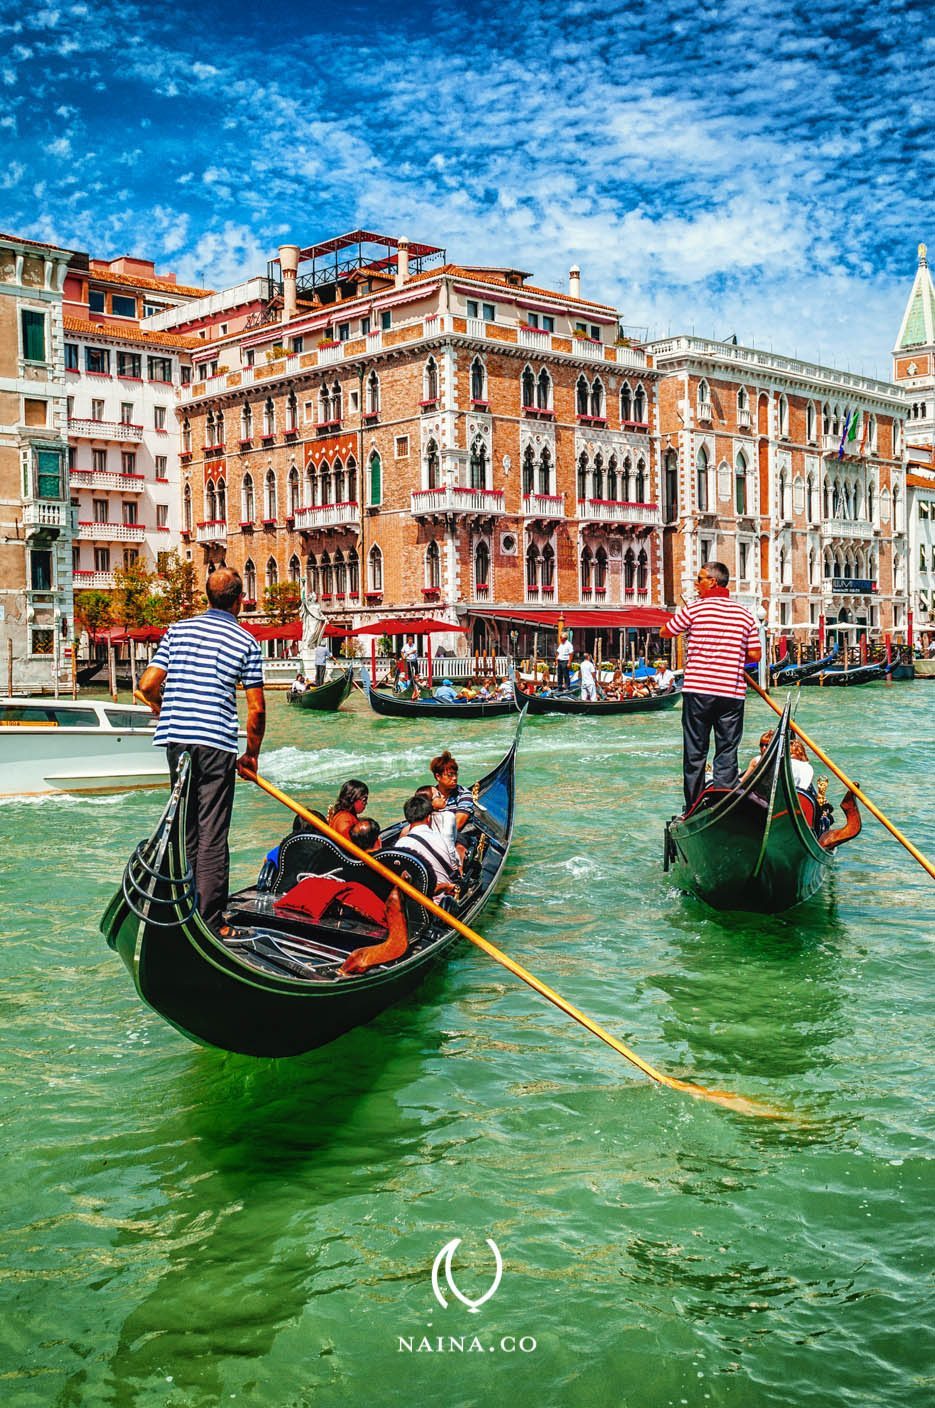 EyesForItaly-Venice-Europe-Naina.co-Raconteuse-Travel-Photographer-Storyteller